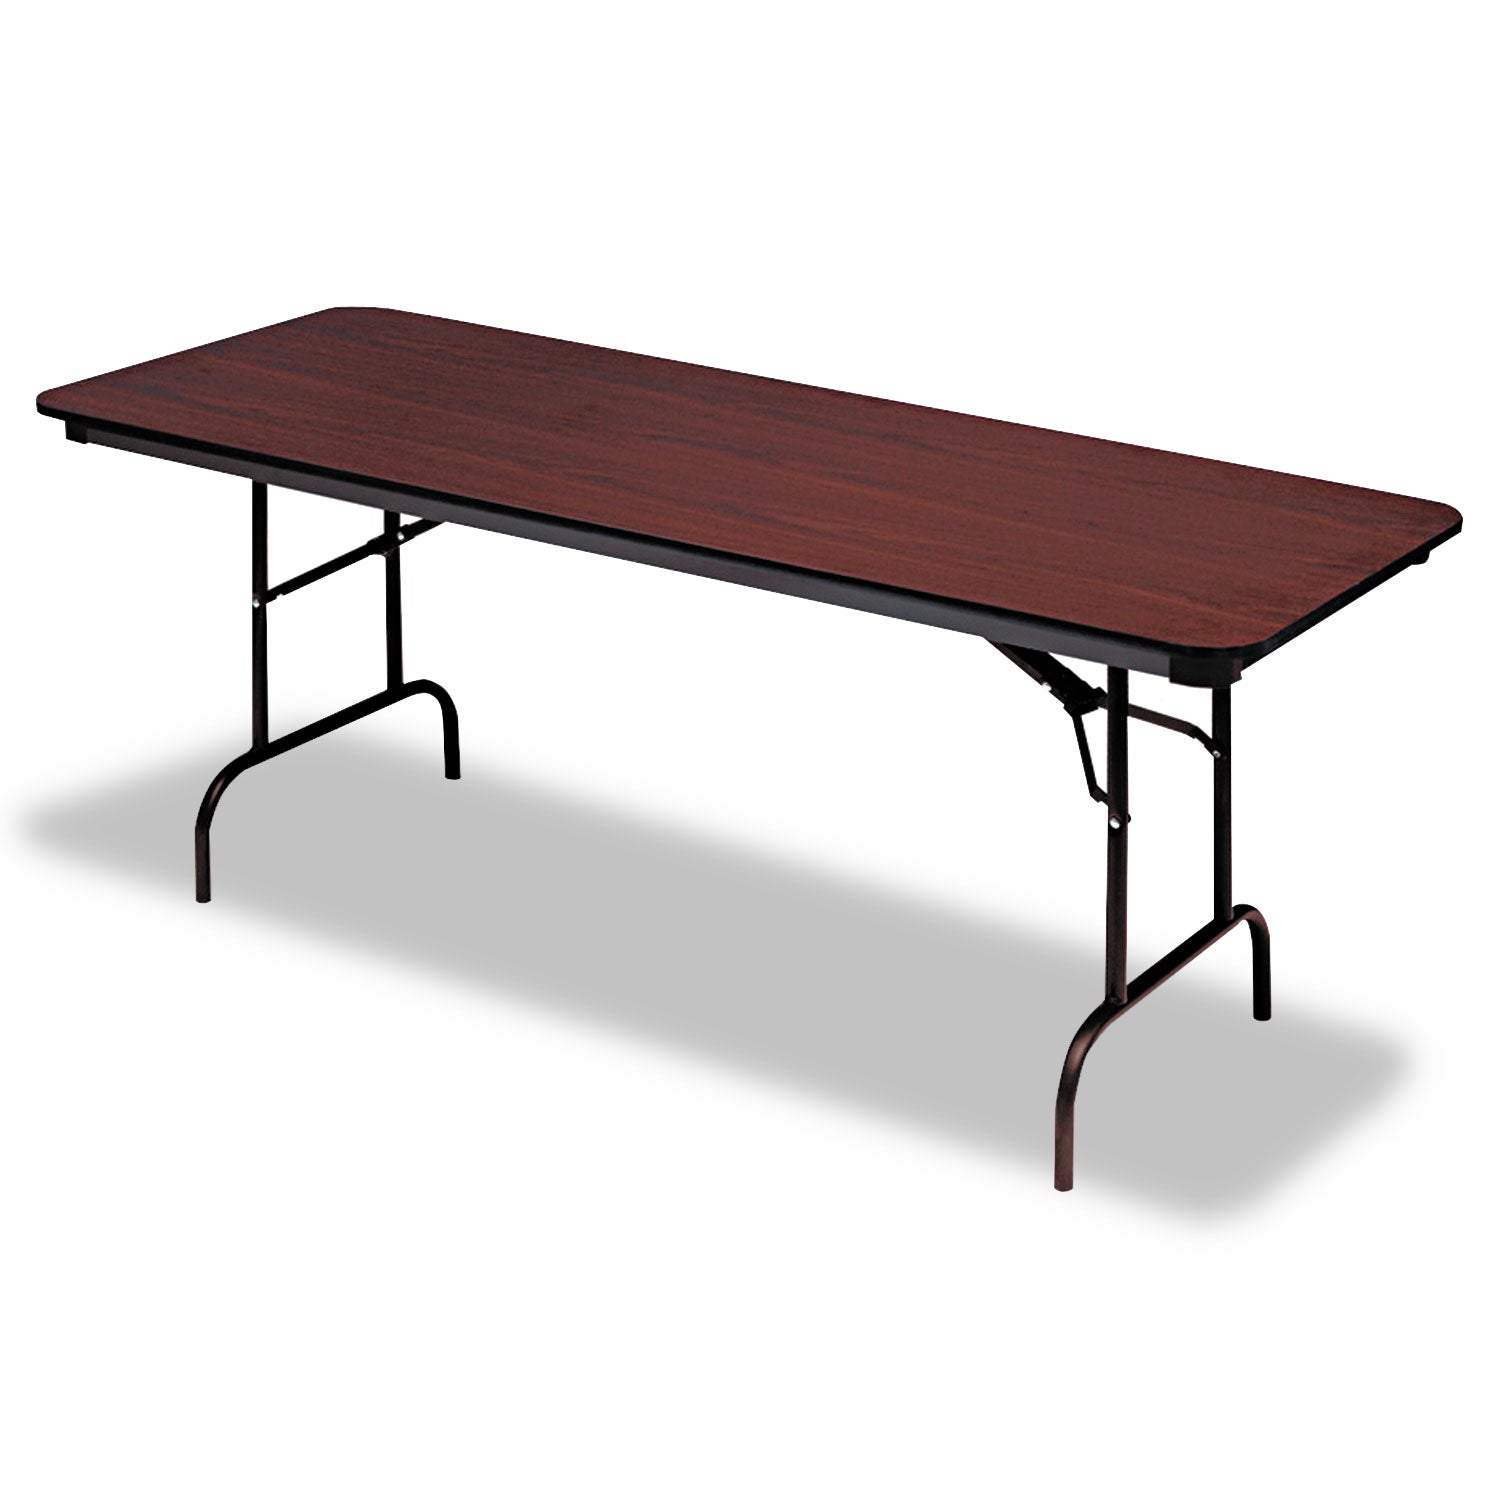 OfficeWorks Commercial Wood-Laminate Folding Table, Rectangular, 72" x 30" x 29", Mahogany - 